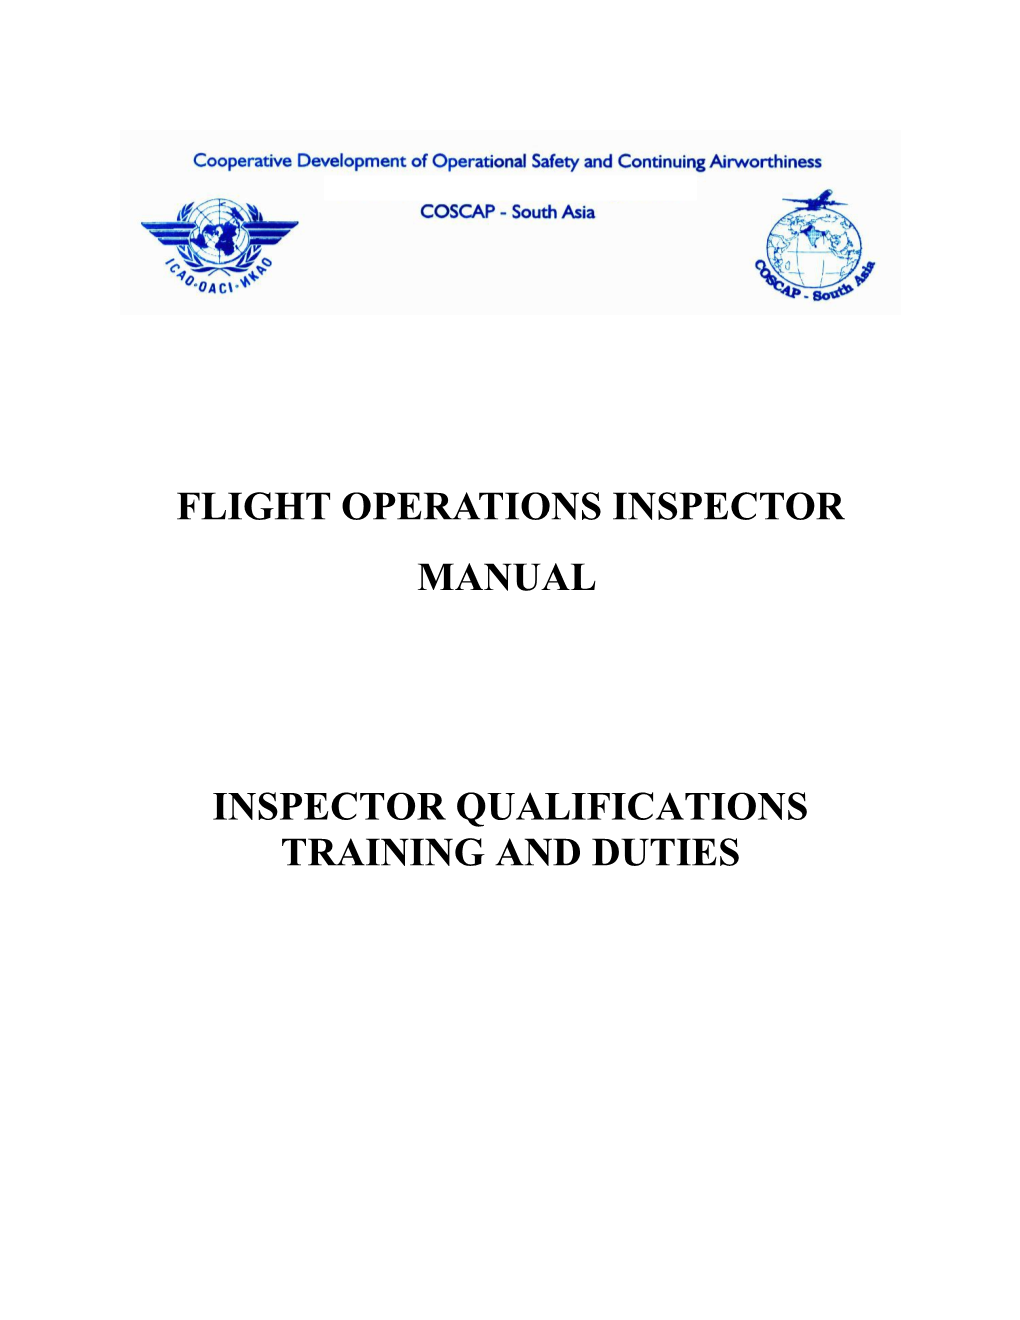 Flight Operations Inspectors